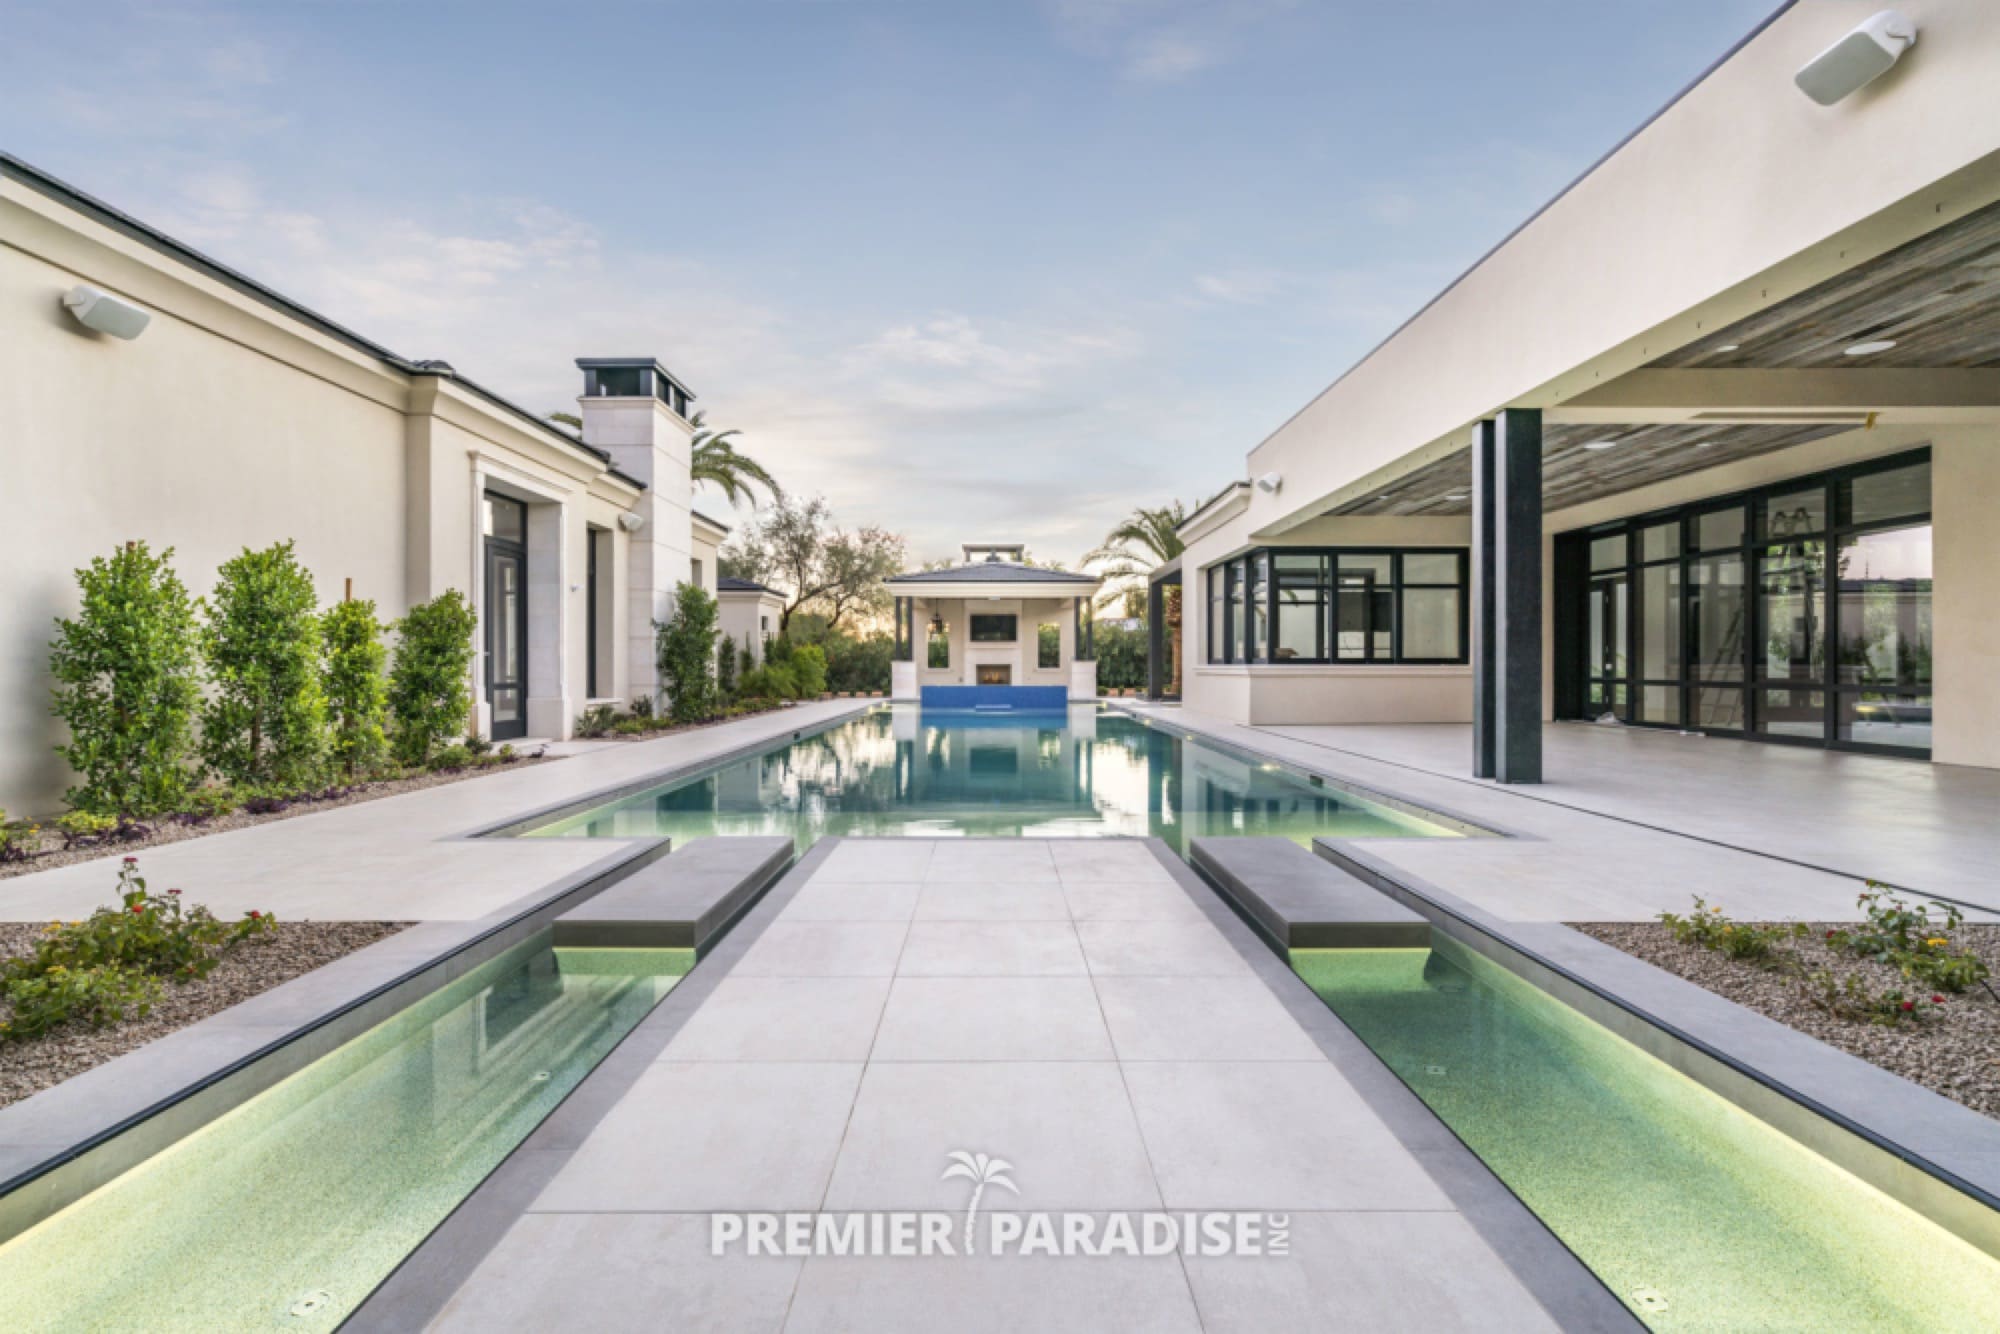 vanishing edge spa design custom pool builder arizona premier paradise inc 3 watermarked